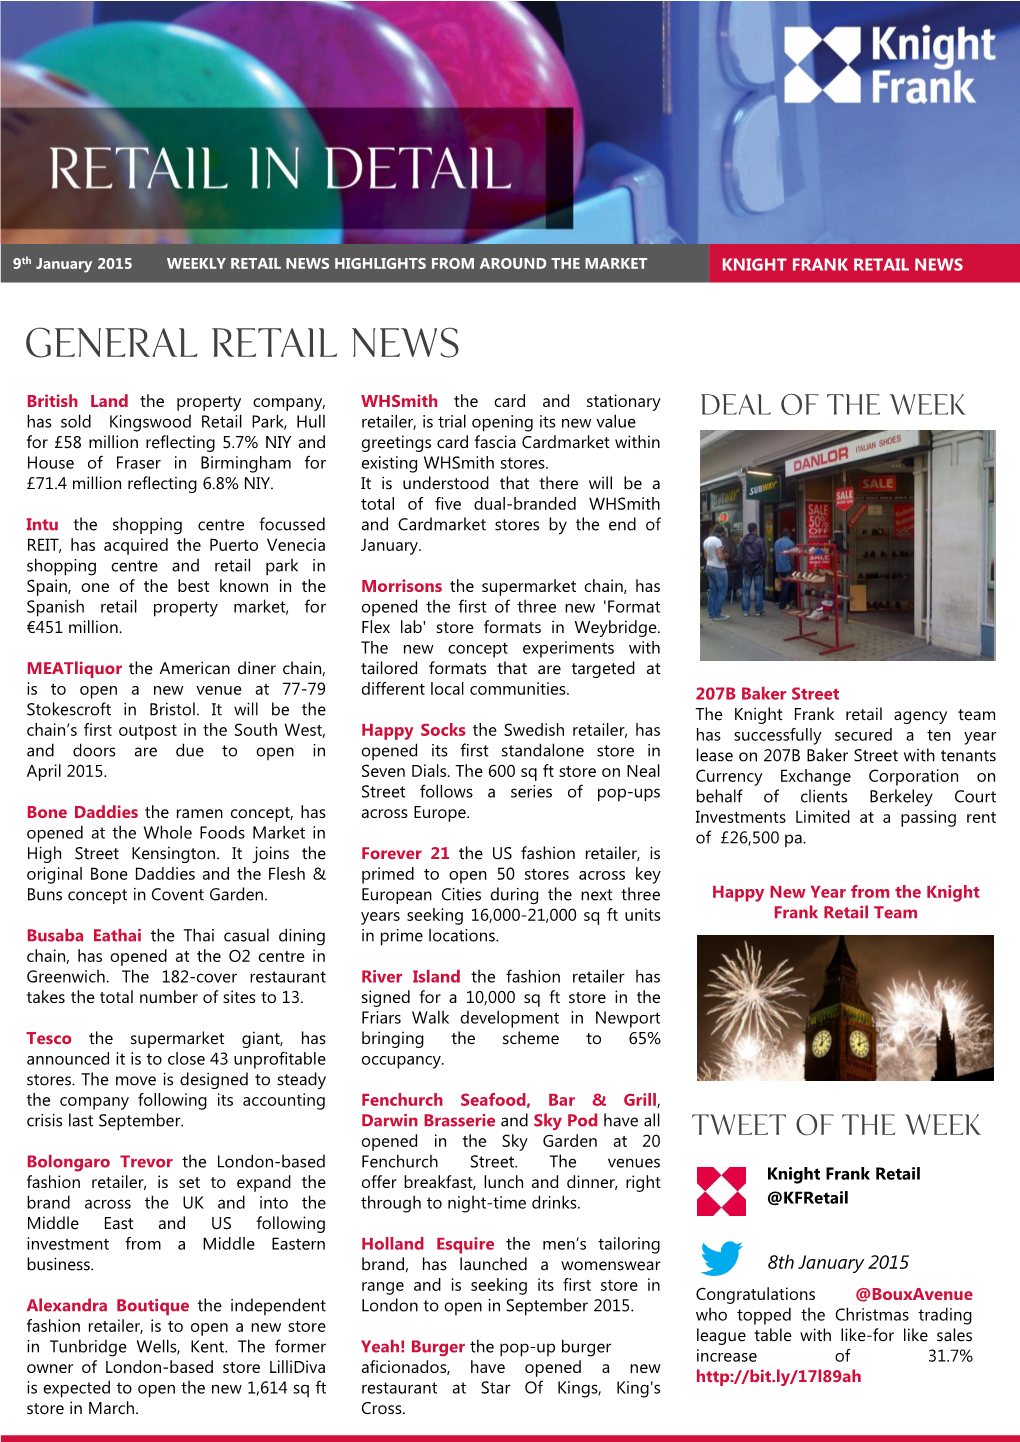 General Retail News